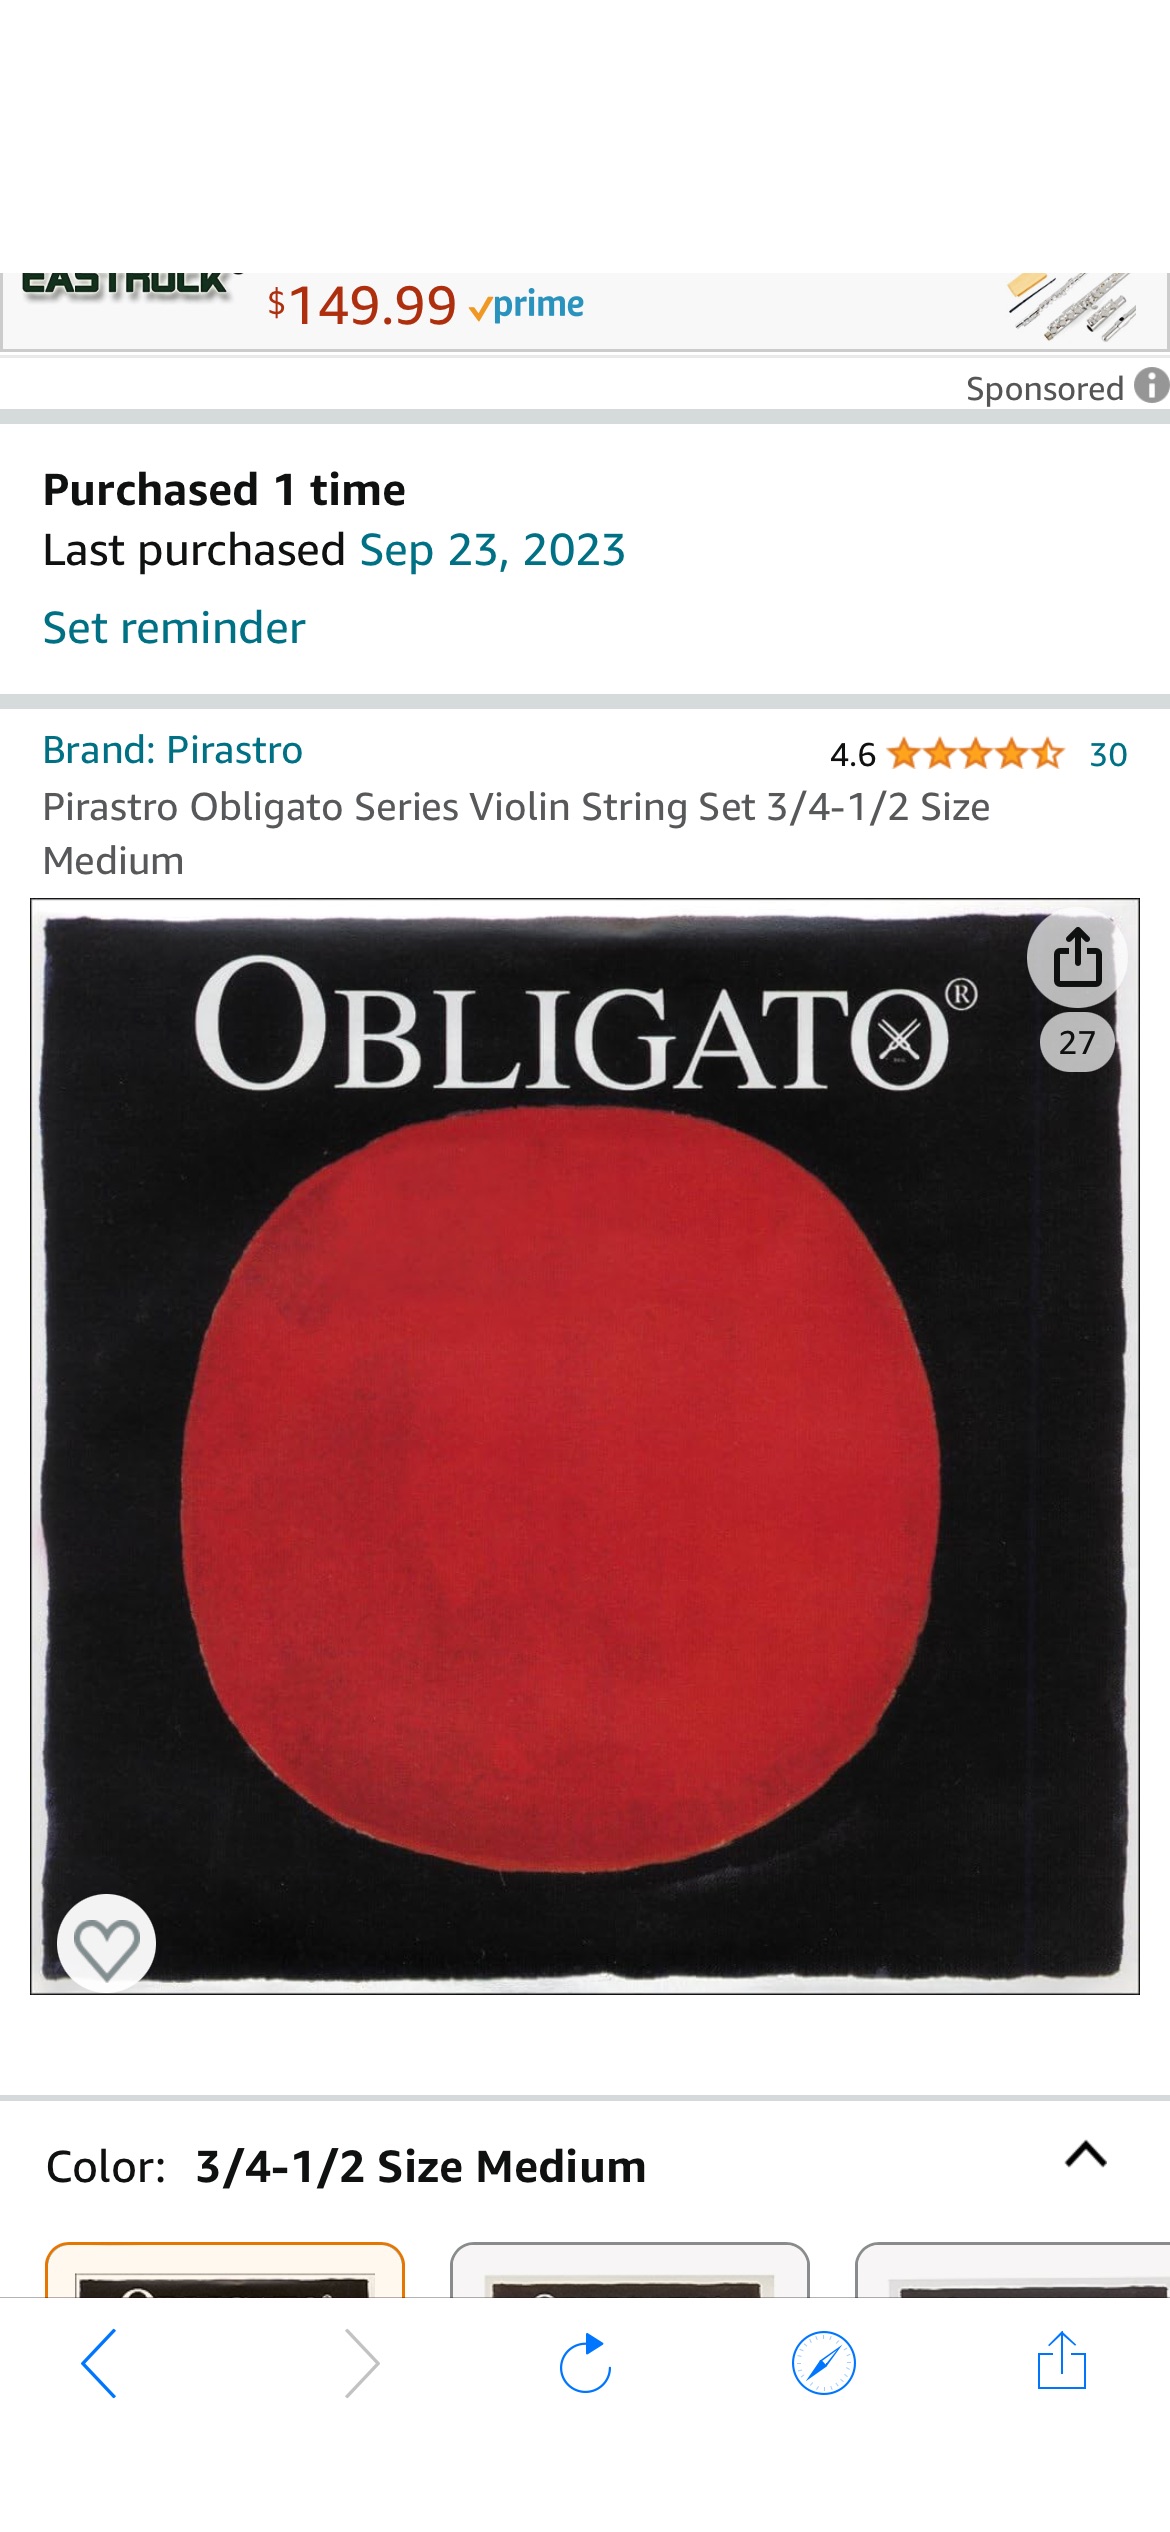 Amazon.com: Pirastro Obligato Series Violin String Set 3/4-1/2 Size Medium : Musical Instruments